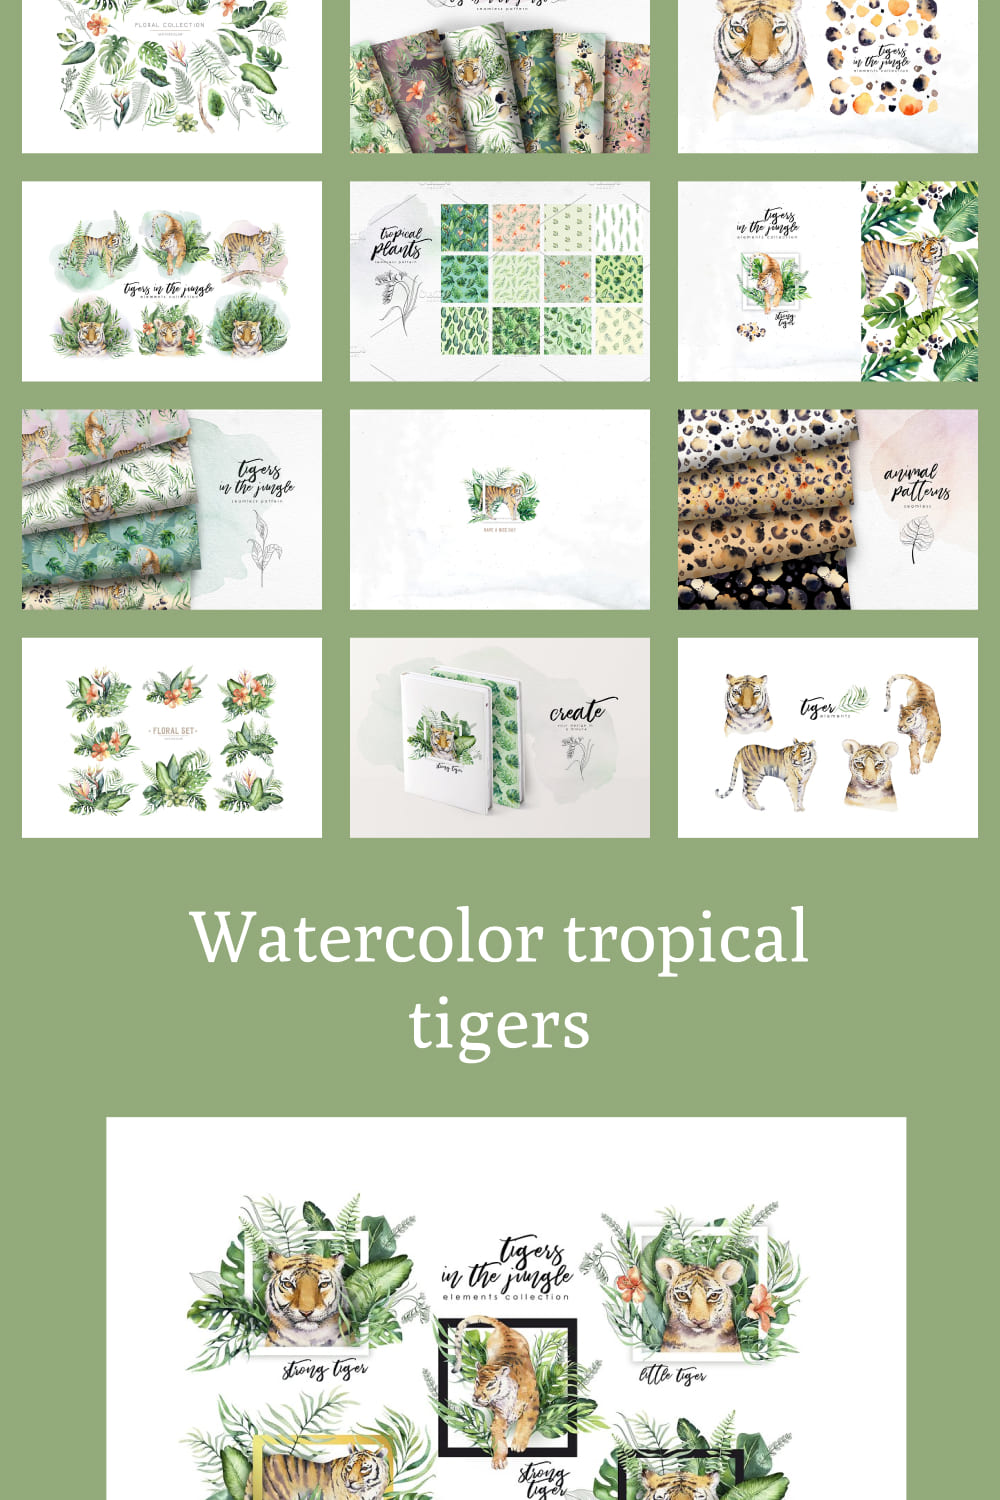 watercolor tropical tigers 04 1000x1500 1